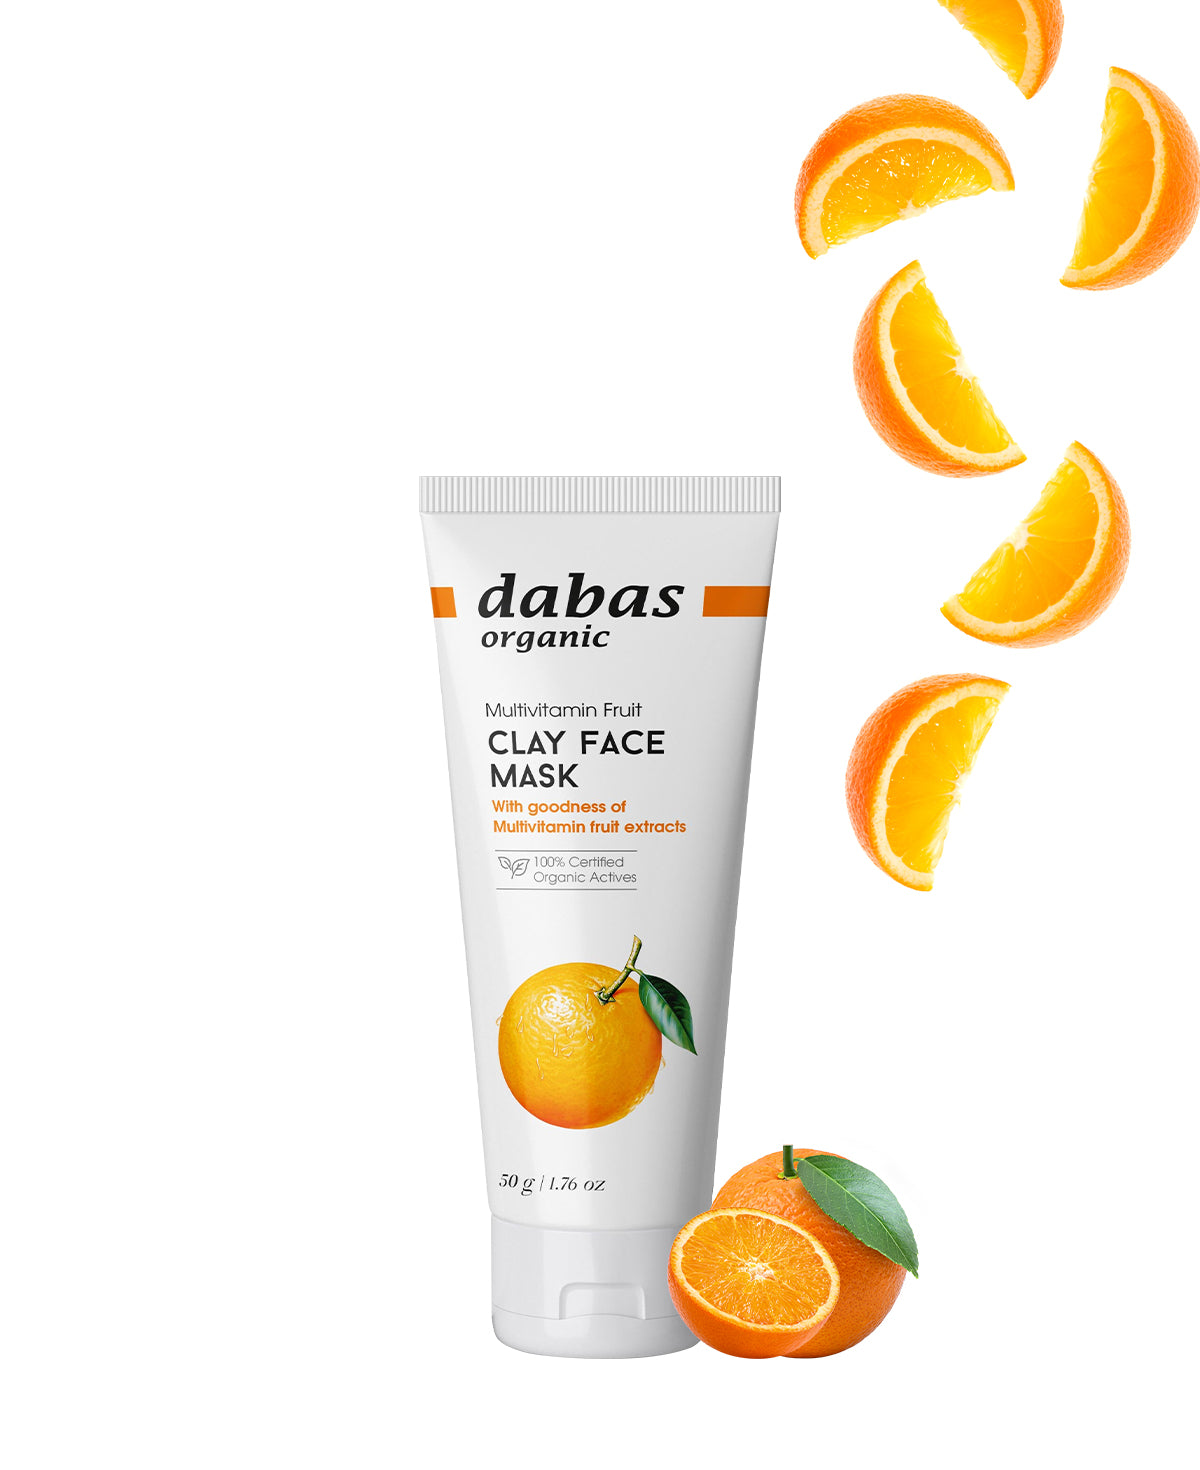 Dabas Organic Multivitamin fruit Clay Face Mask